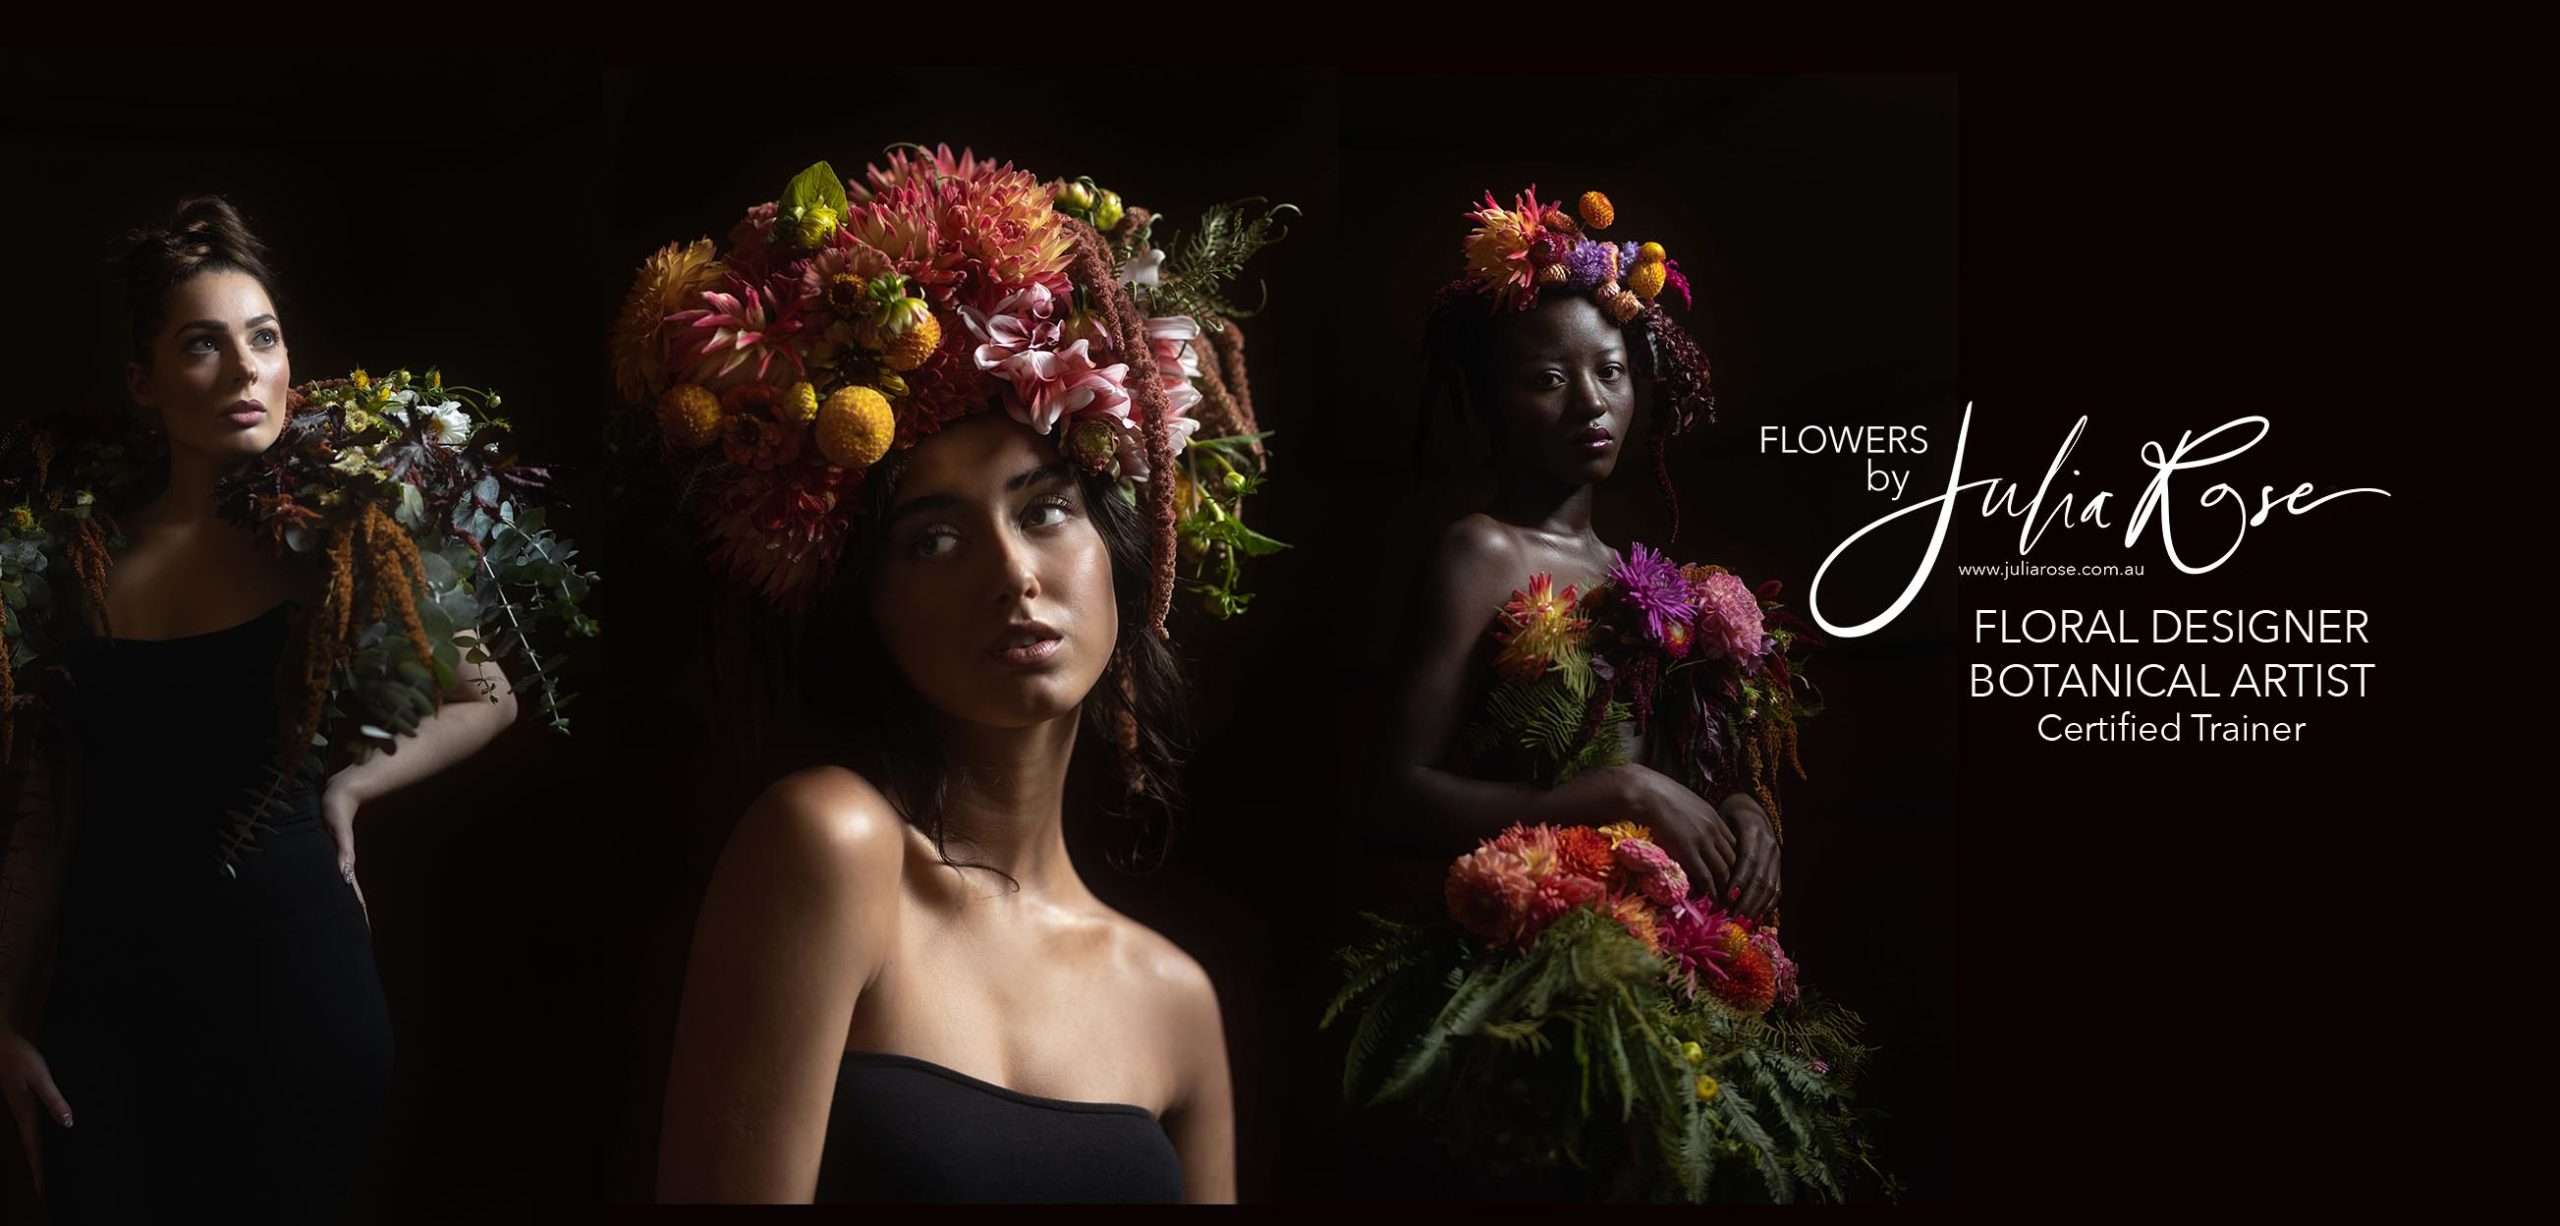 website JULIA ROSE - floral designer www.juliarose.com.au - artist copy cover 2